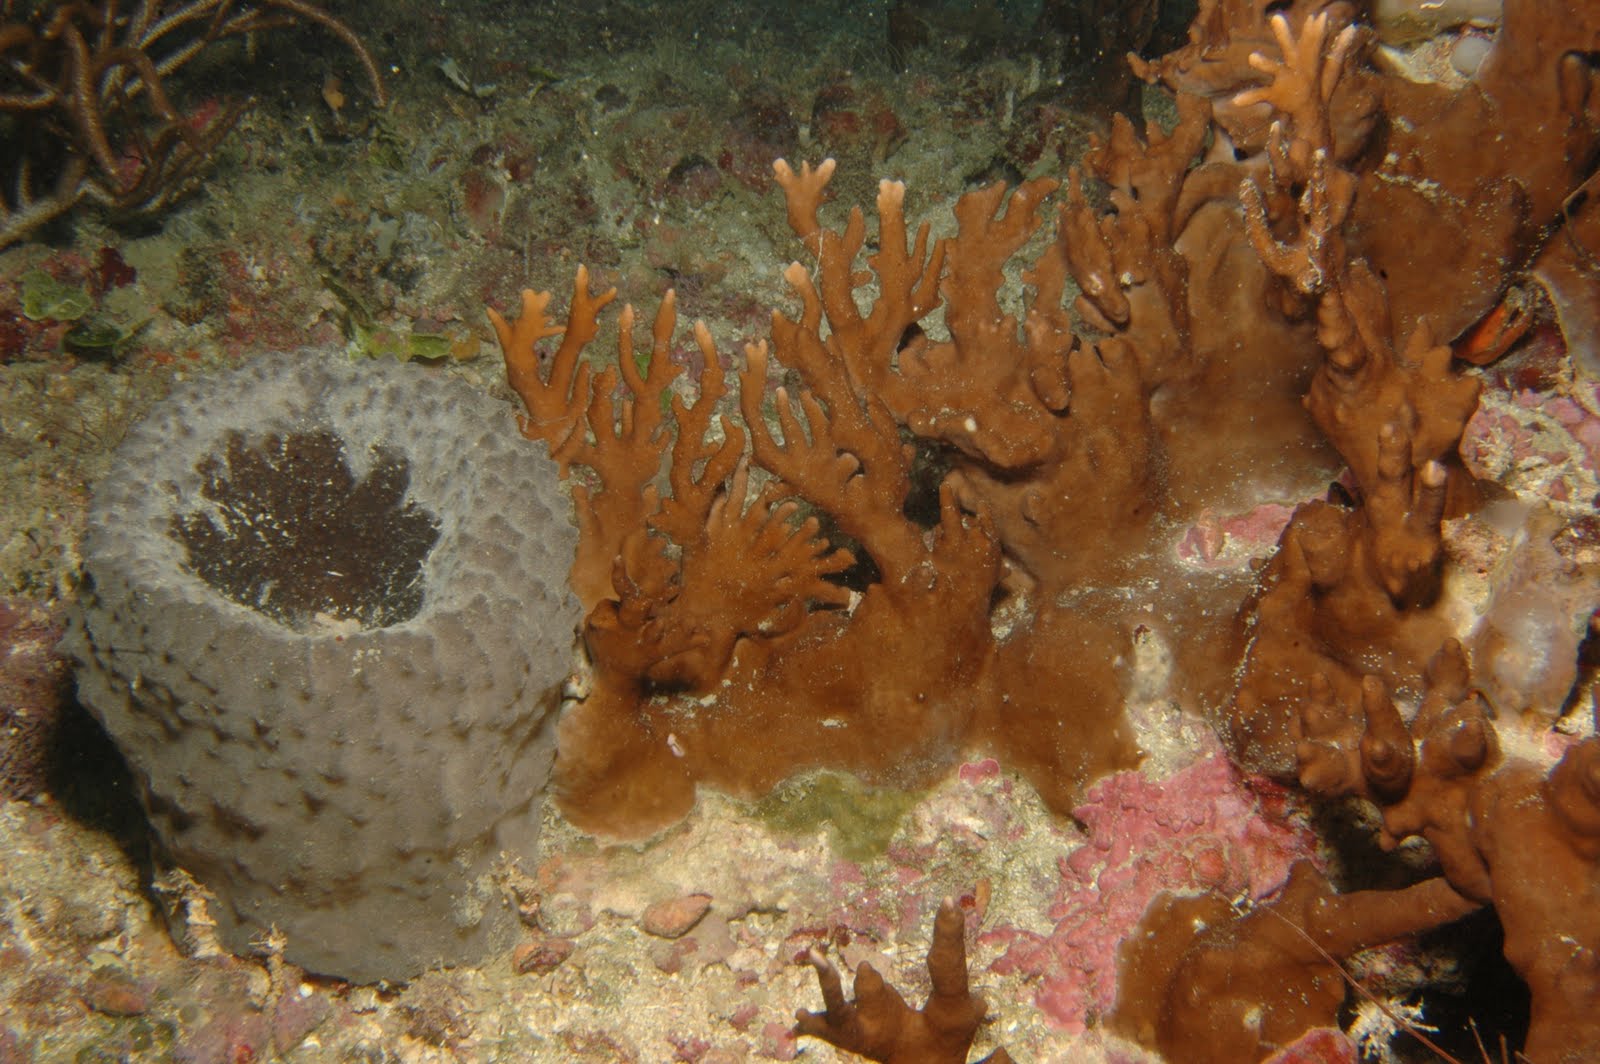 brown/orange corals and a gray sponge on the sea floor